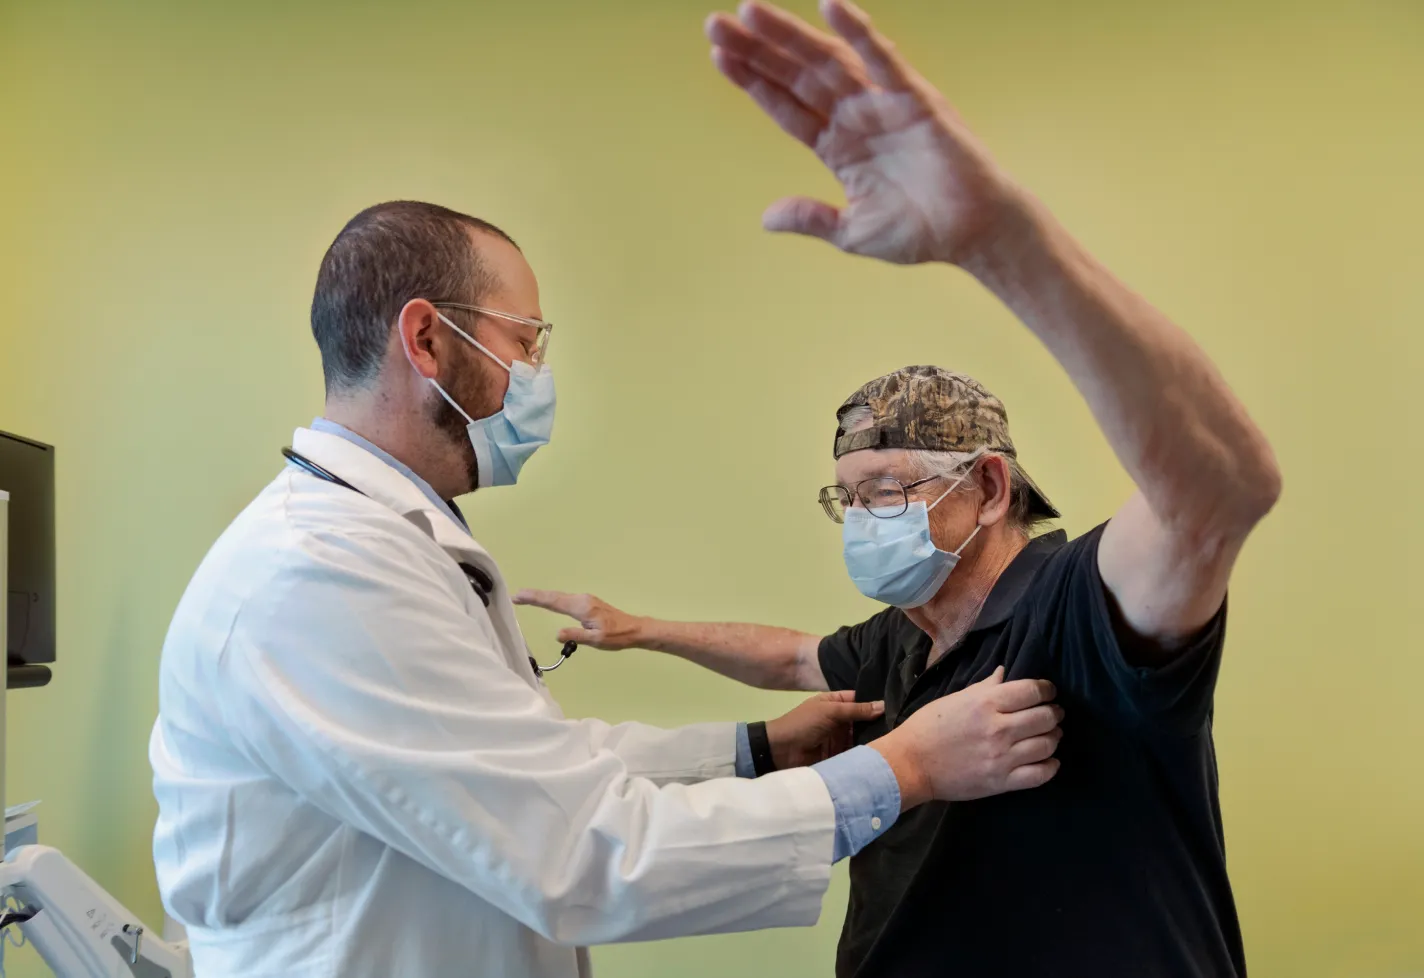 Dr. Skarbnik examines a patient